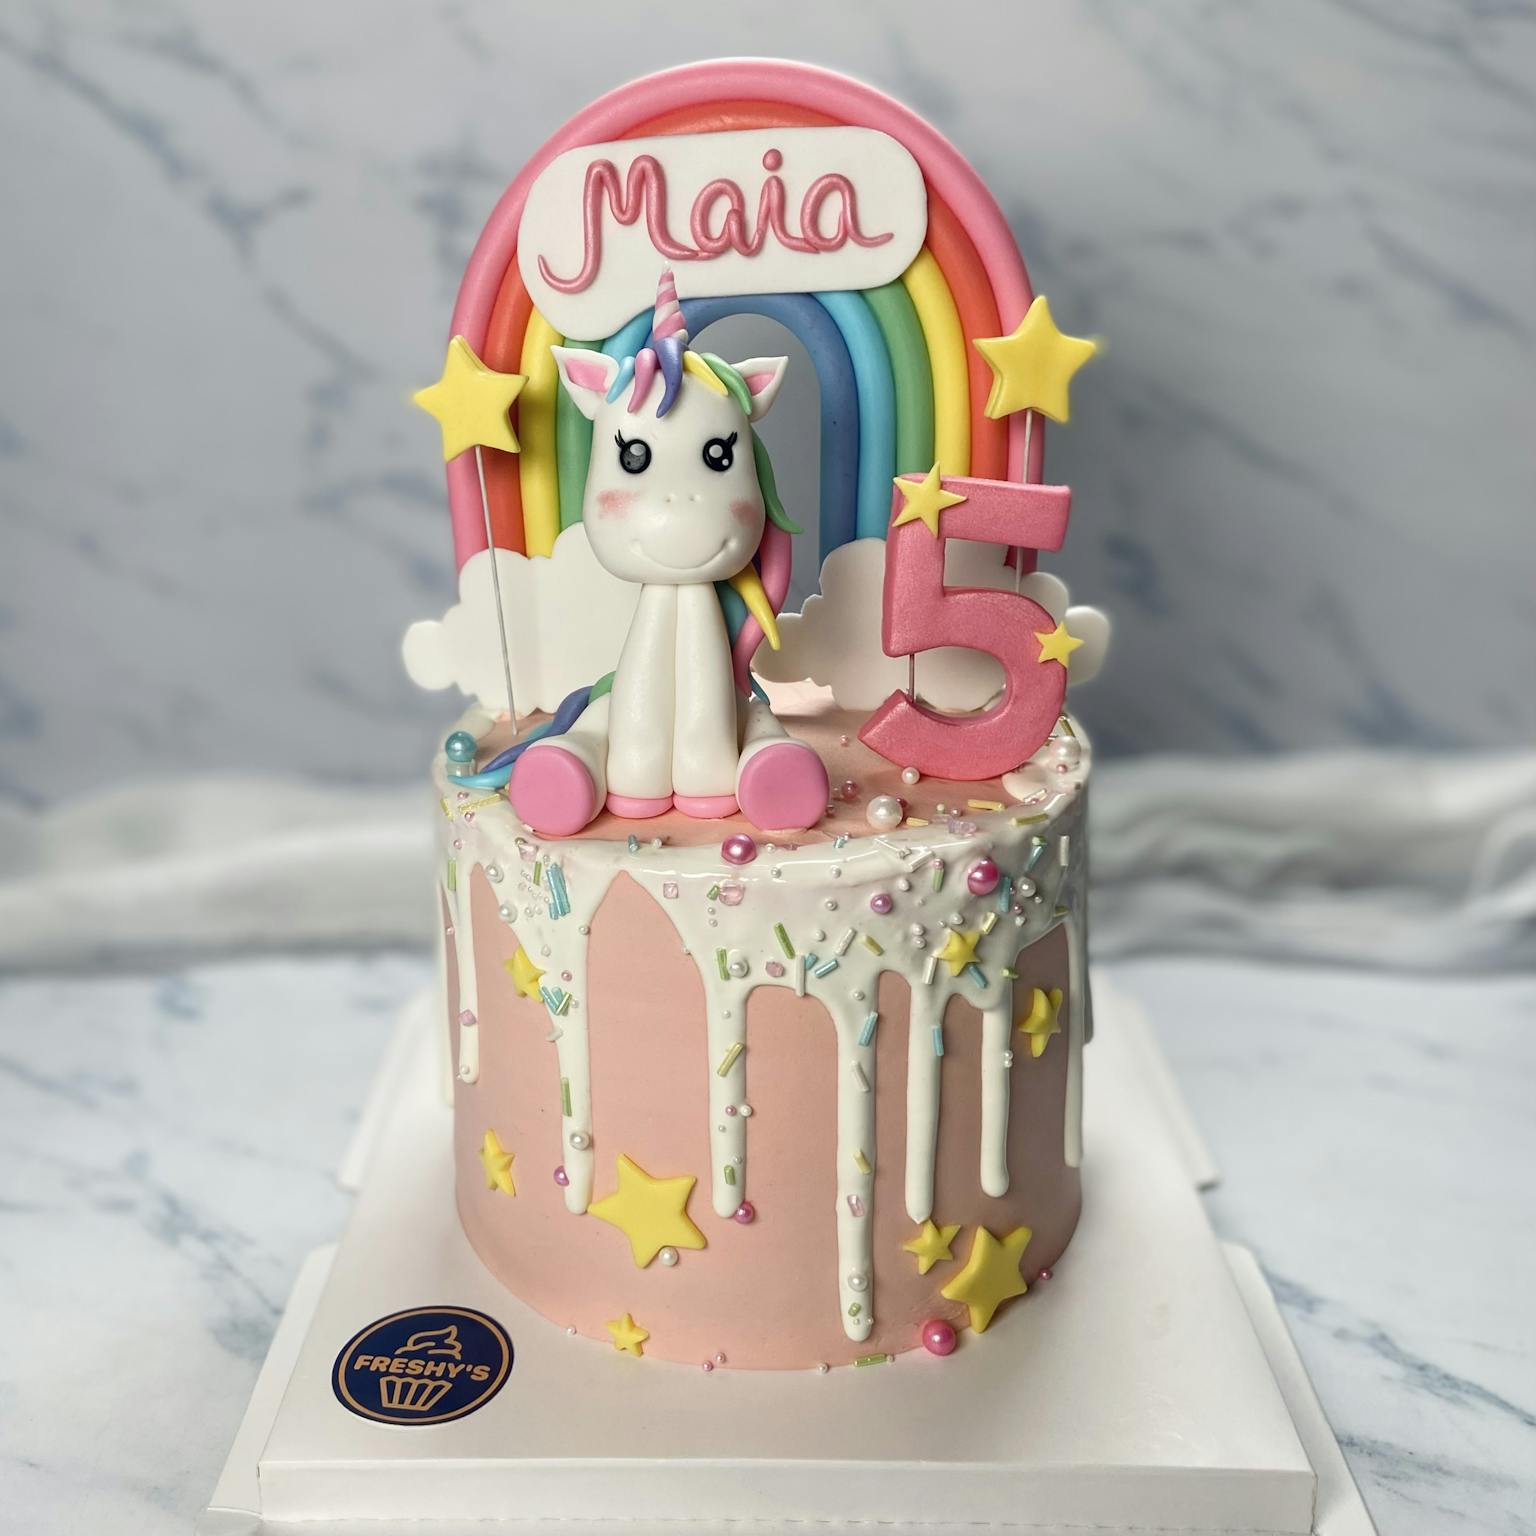 100% edible fondant sculpted unicorn themed cake